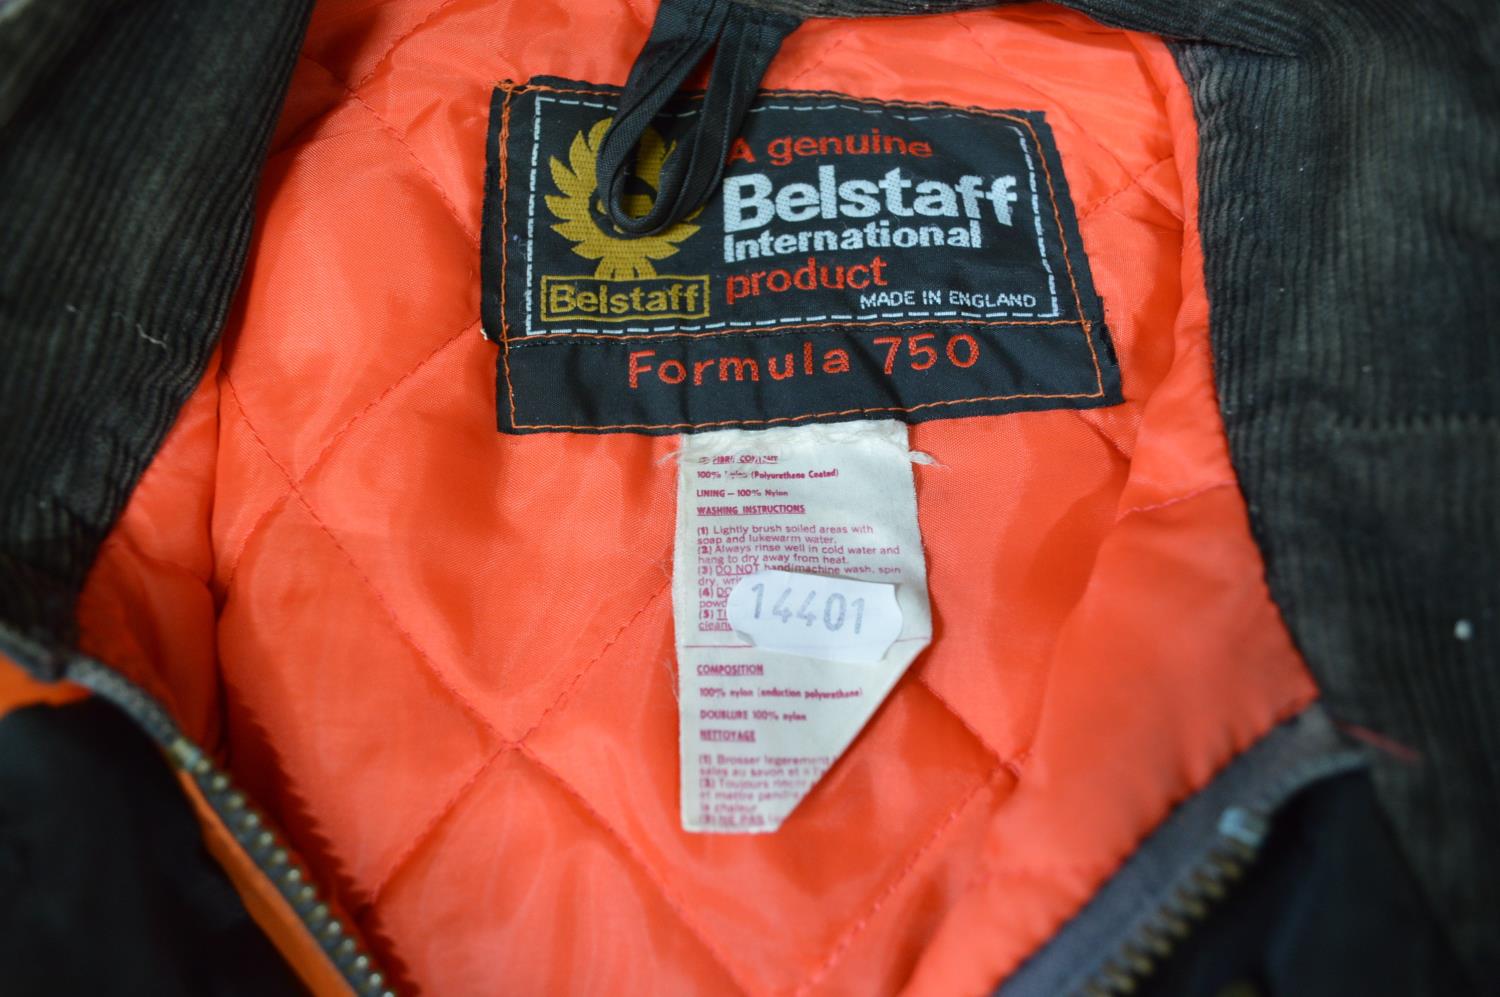 Ladies Belstaff International Formula 750 lined shower proof jacket Please note descriptions are not - Image 3 of 4